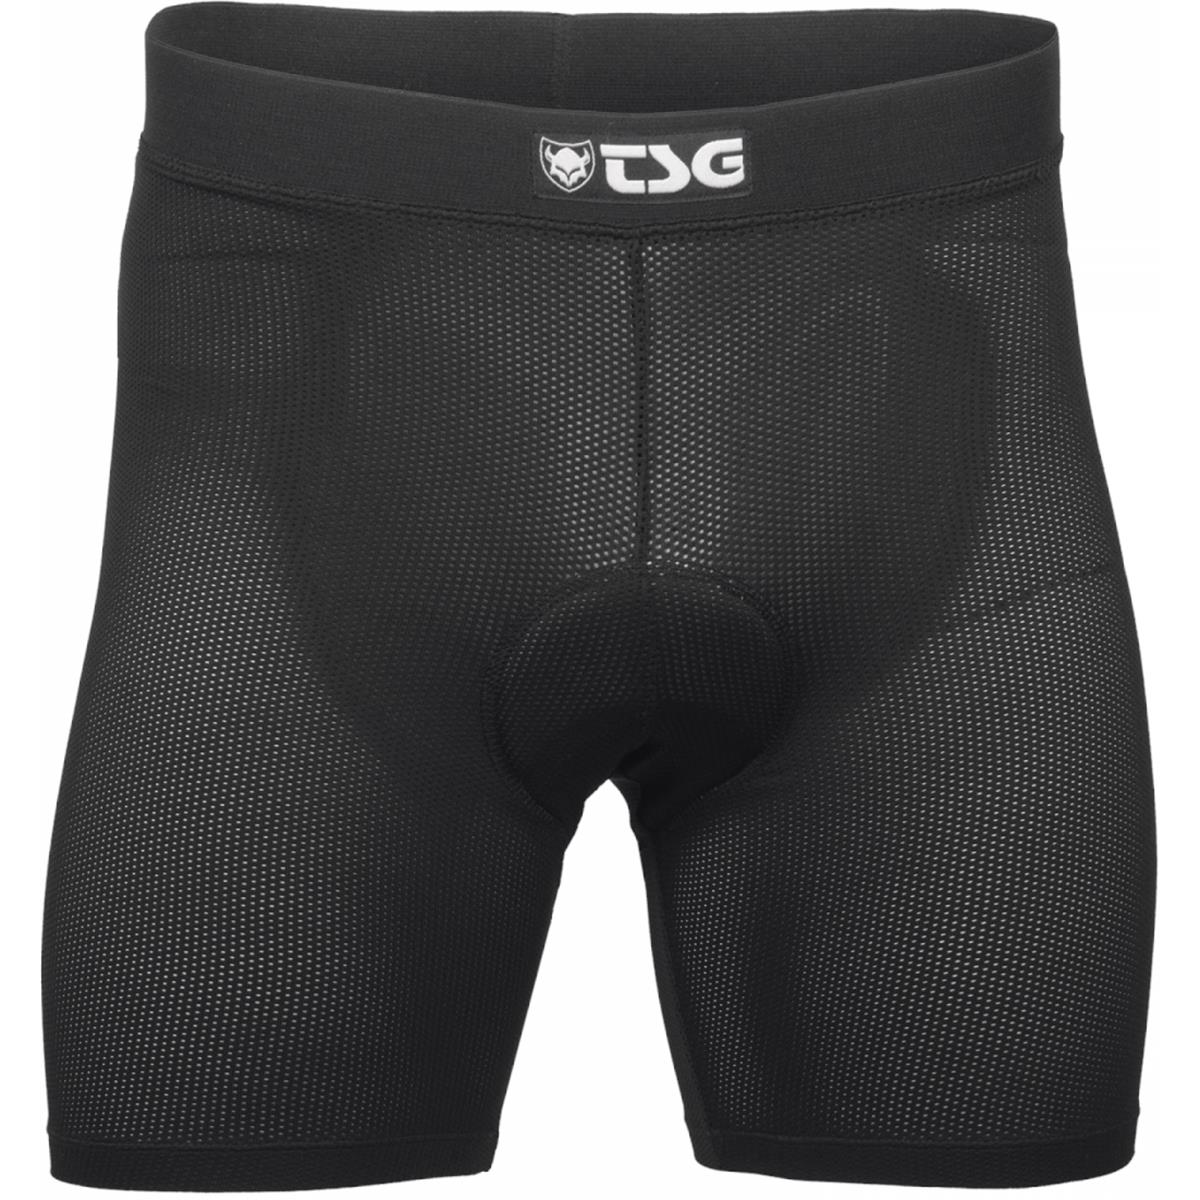 TSG Base Layer Pants Liner Black